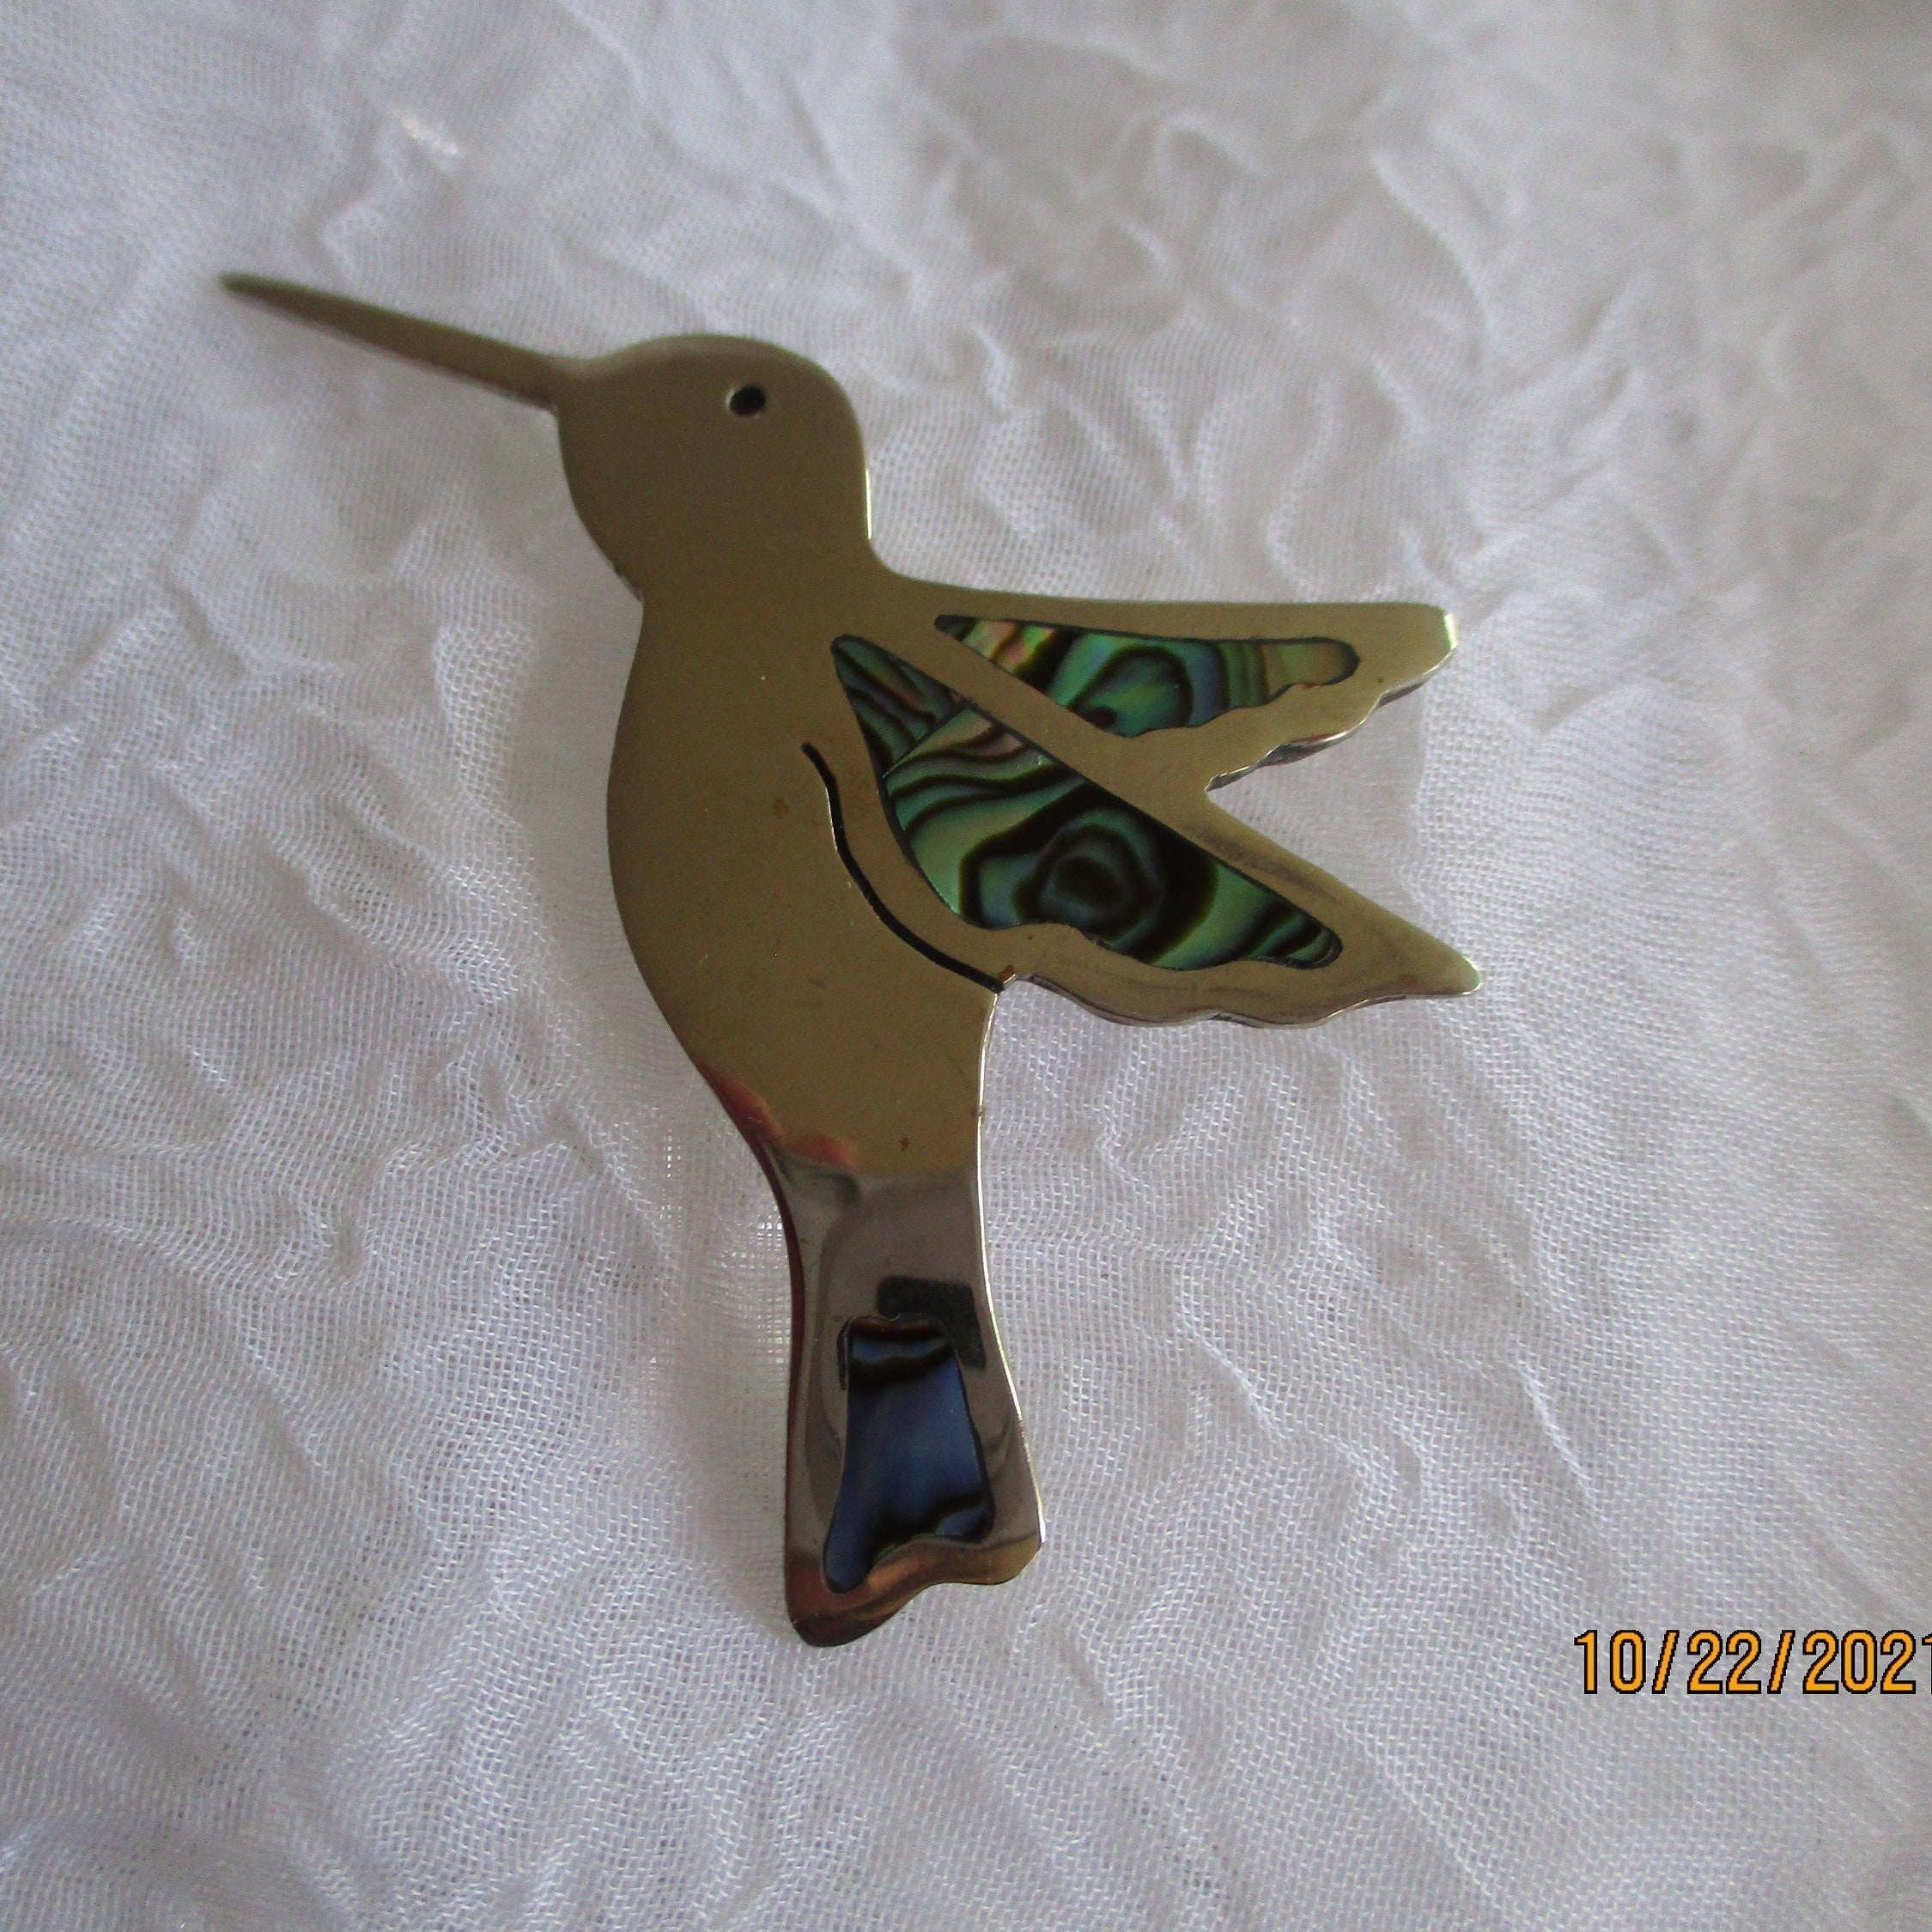 Hummingbird Brooch Hummingbird Jewelry Hummingbird Pin Hat Pins for Women  Pocketbook Pins 